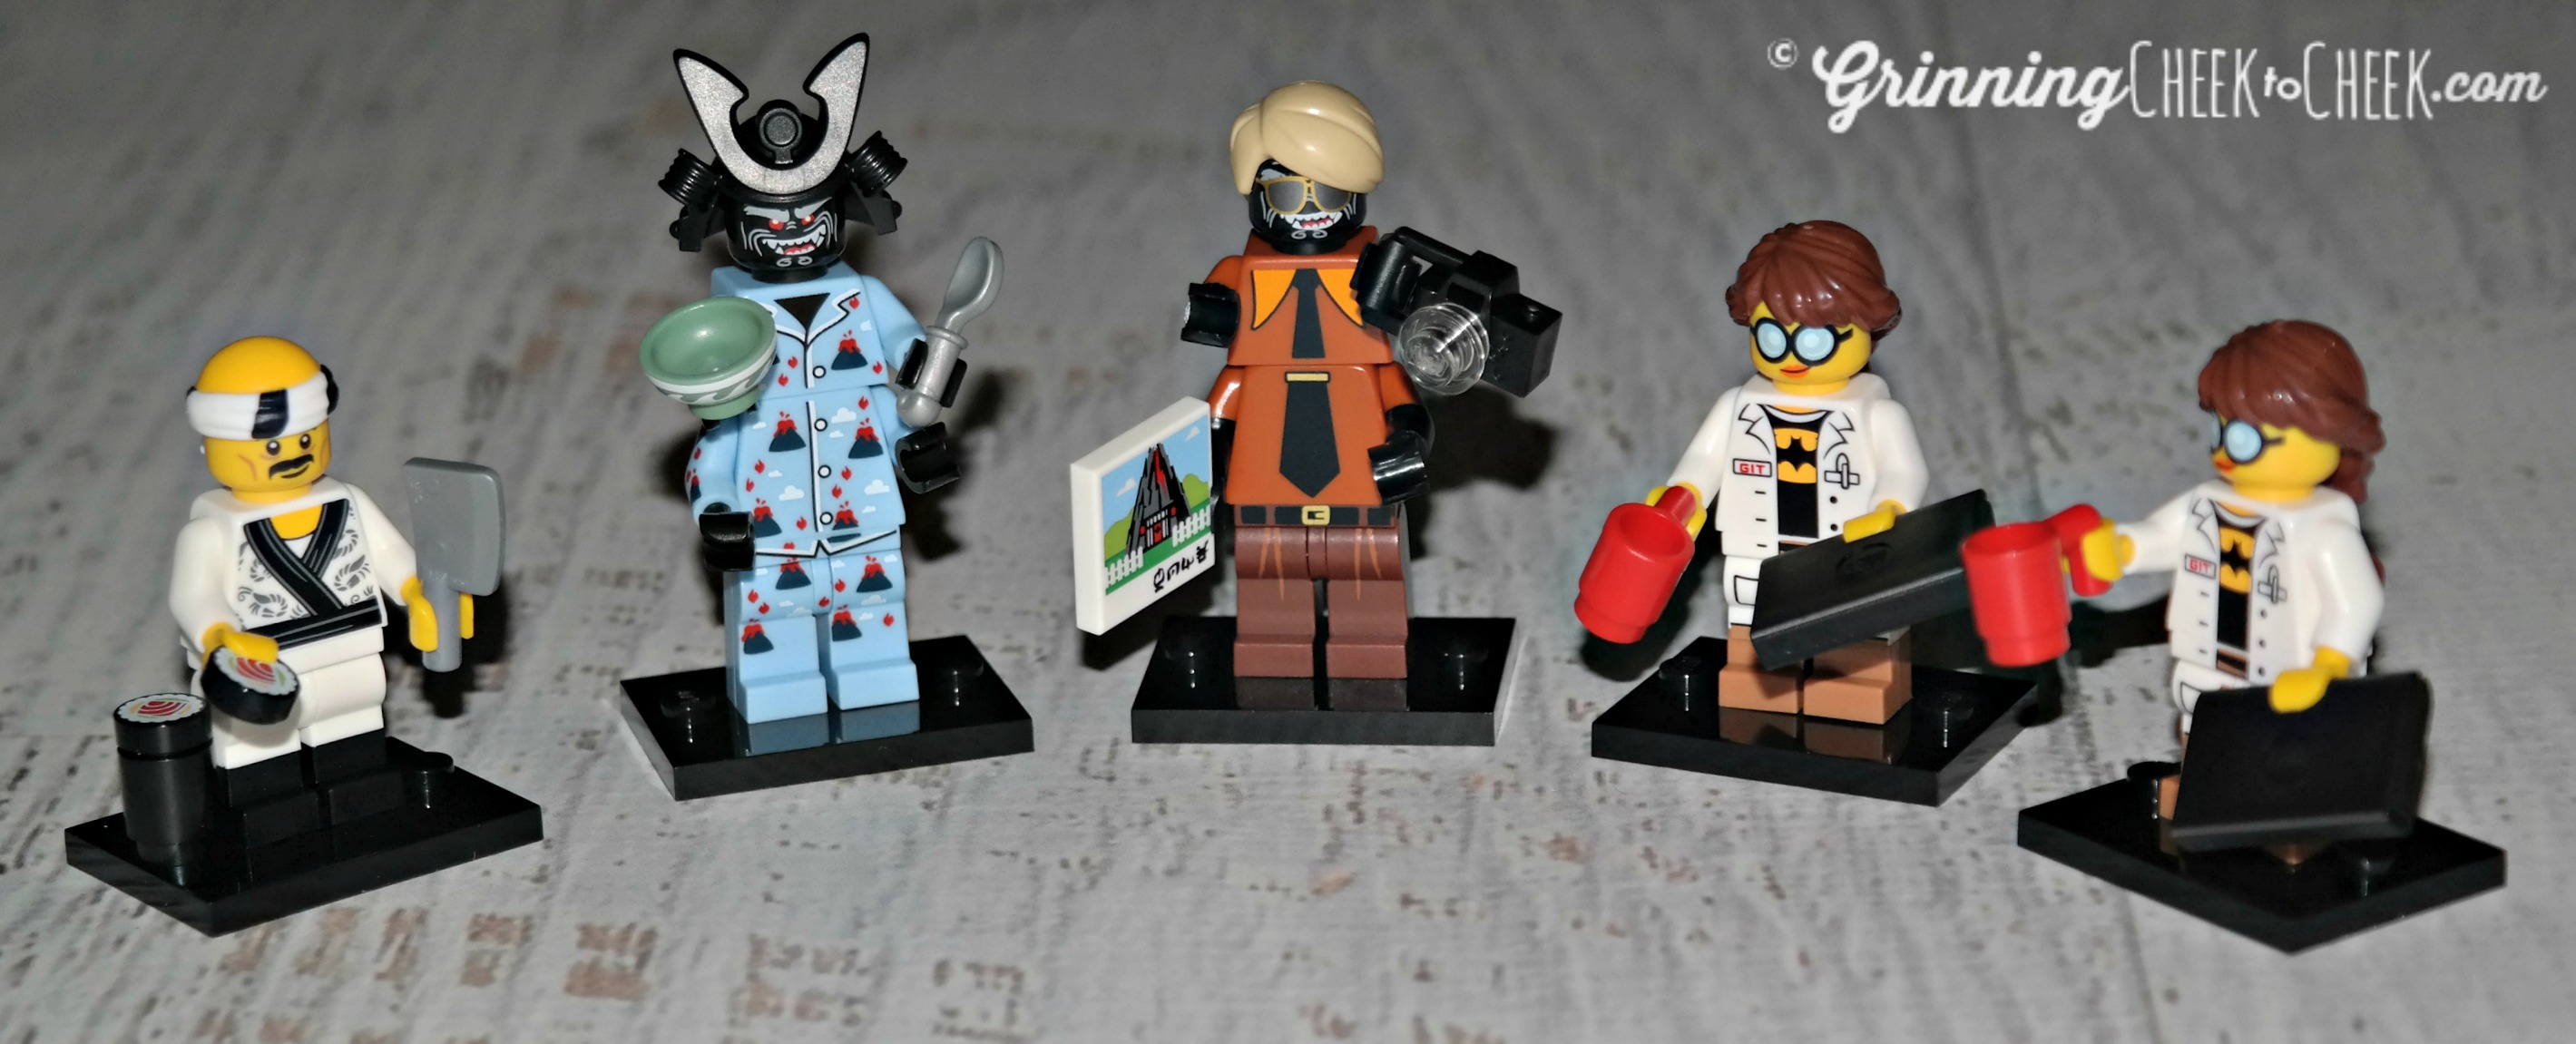 Excited for Lego Ninjago! #ad #movie #lego #ninjasrule